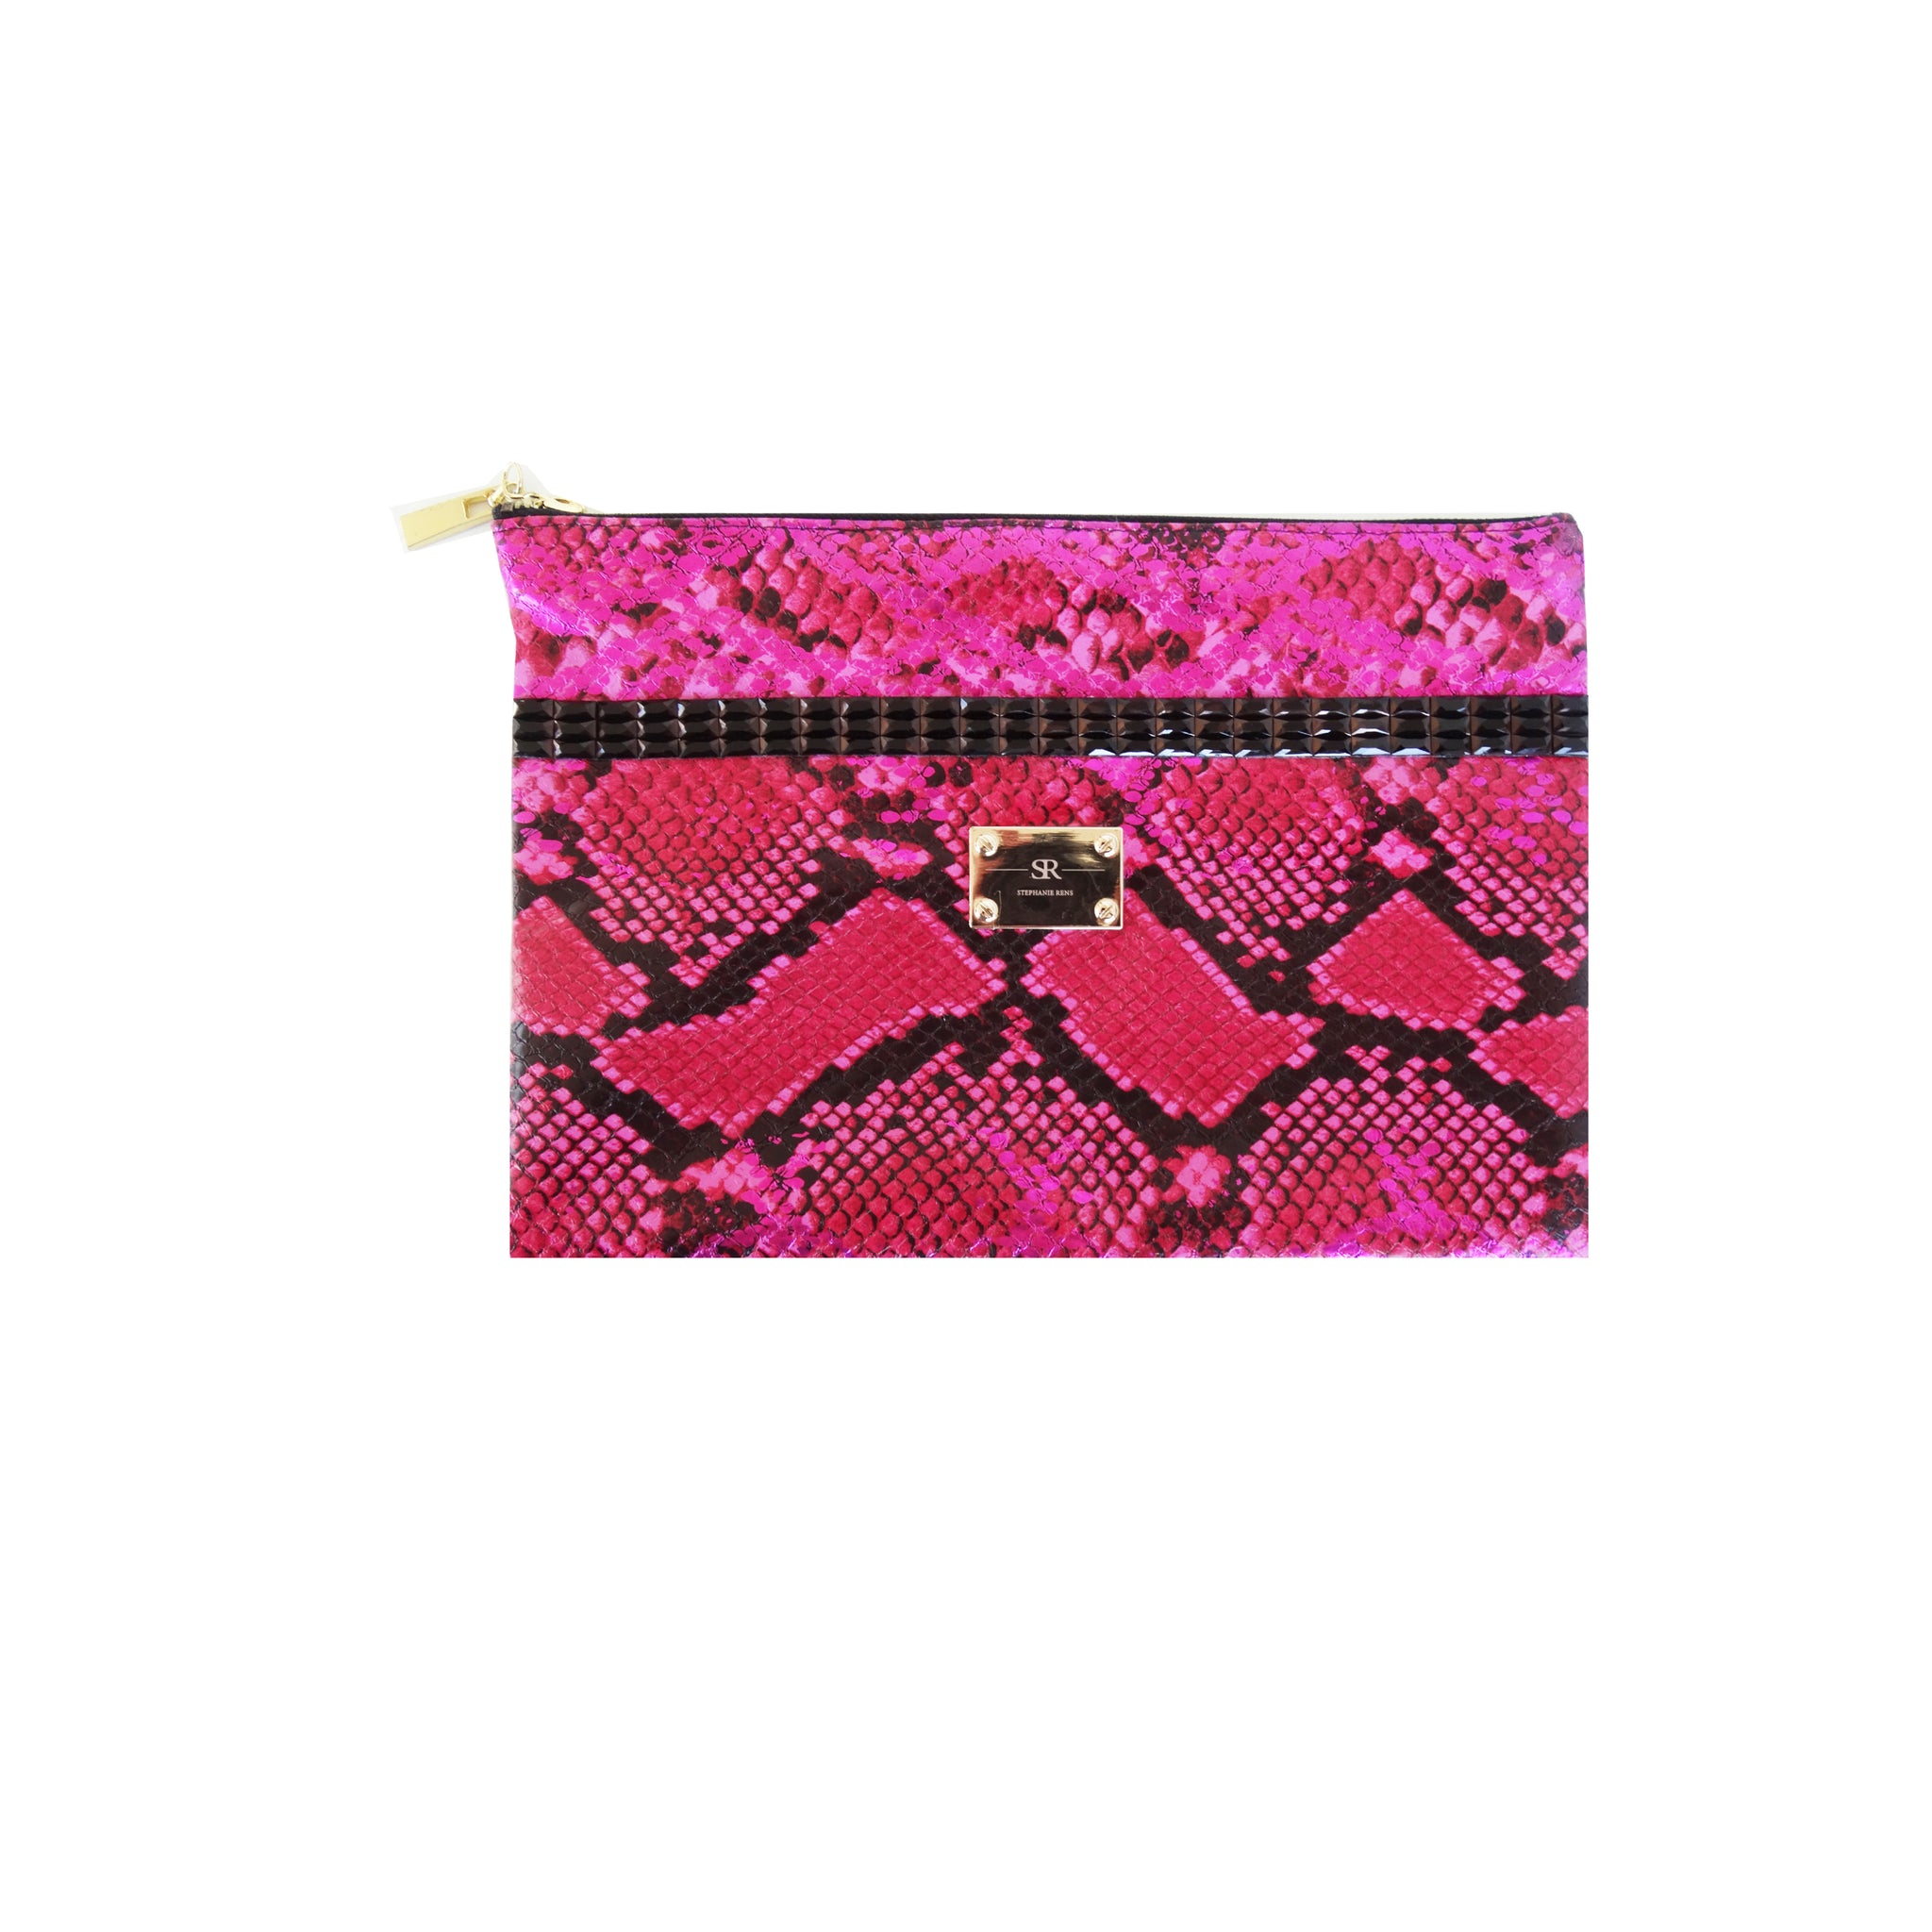 Vegan hot pink leather python zipper case